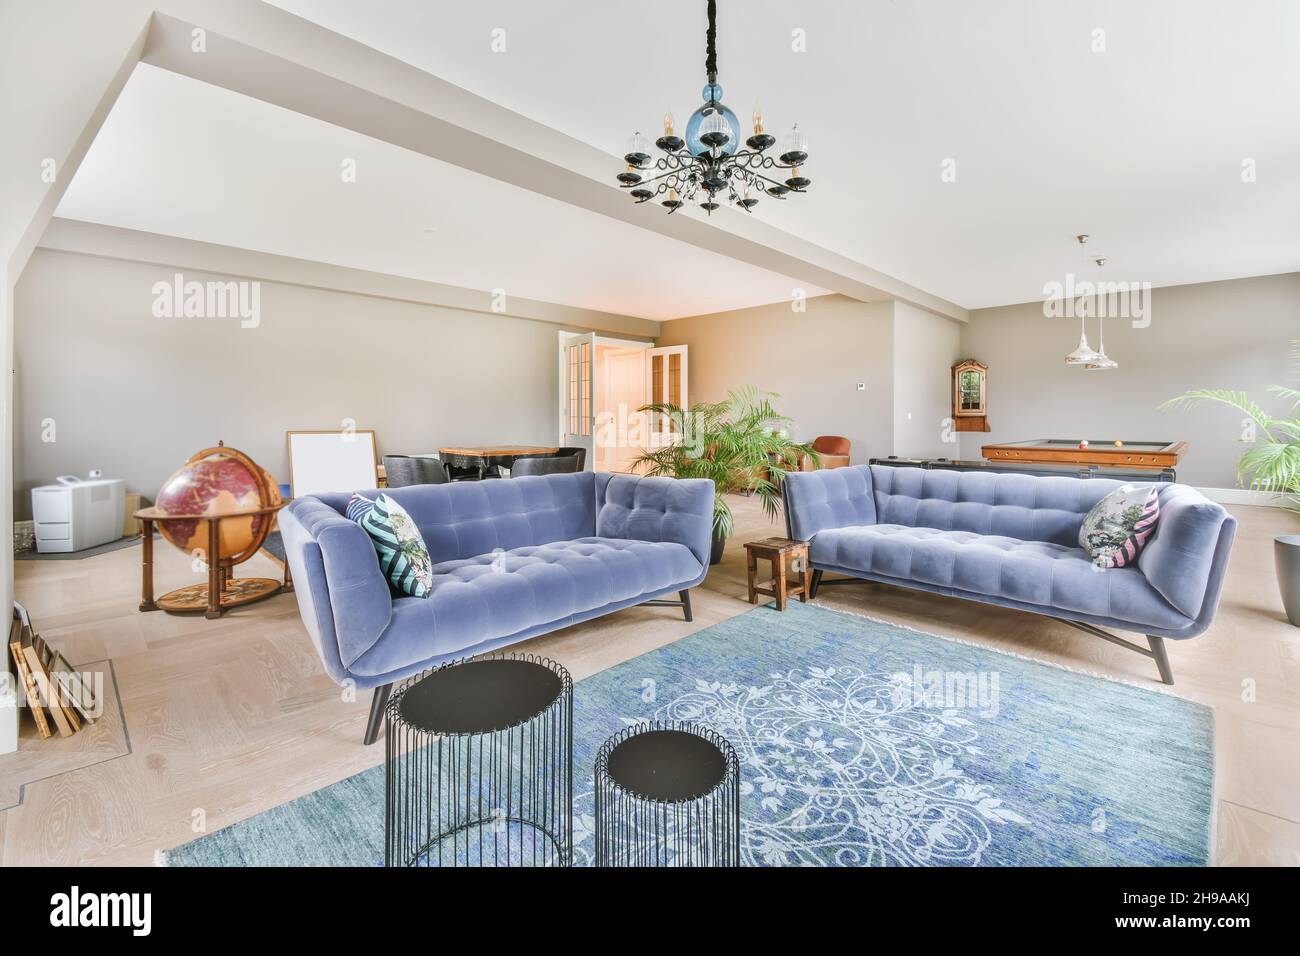 Stunning living room with plush comfy and plush sofas Stock Photo